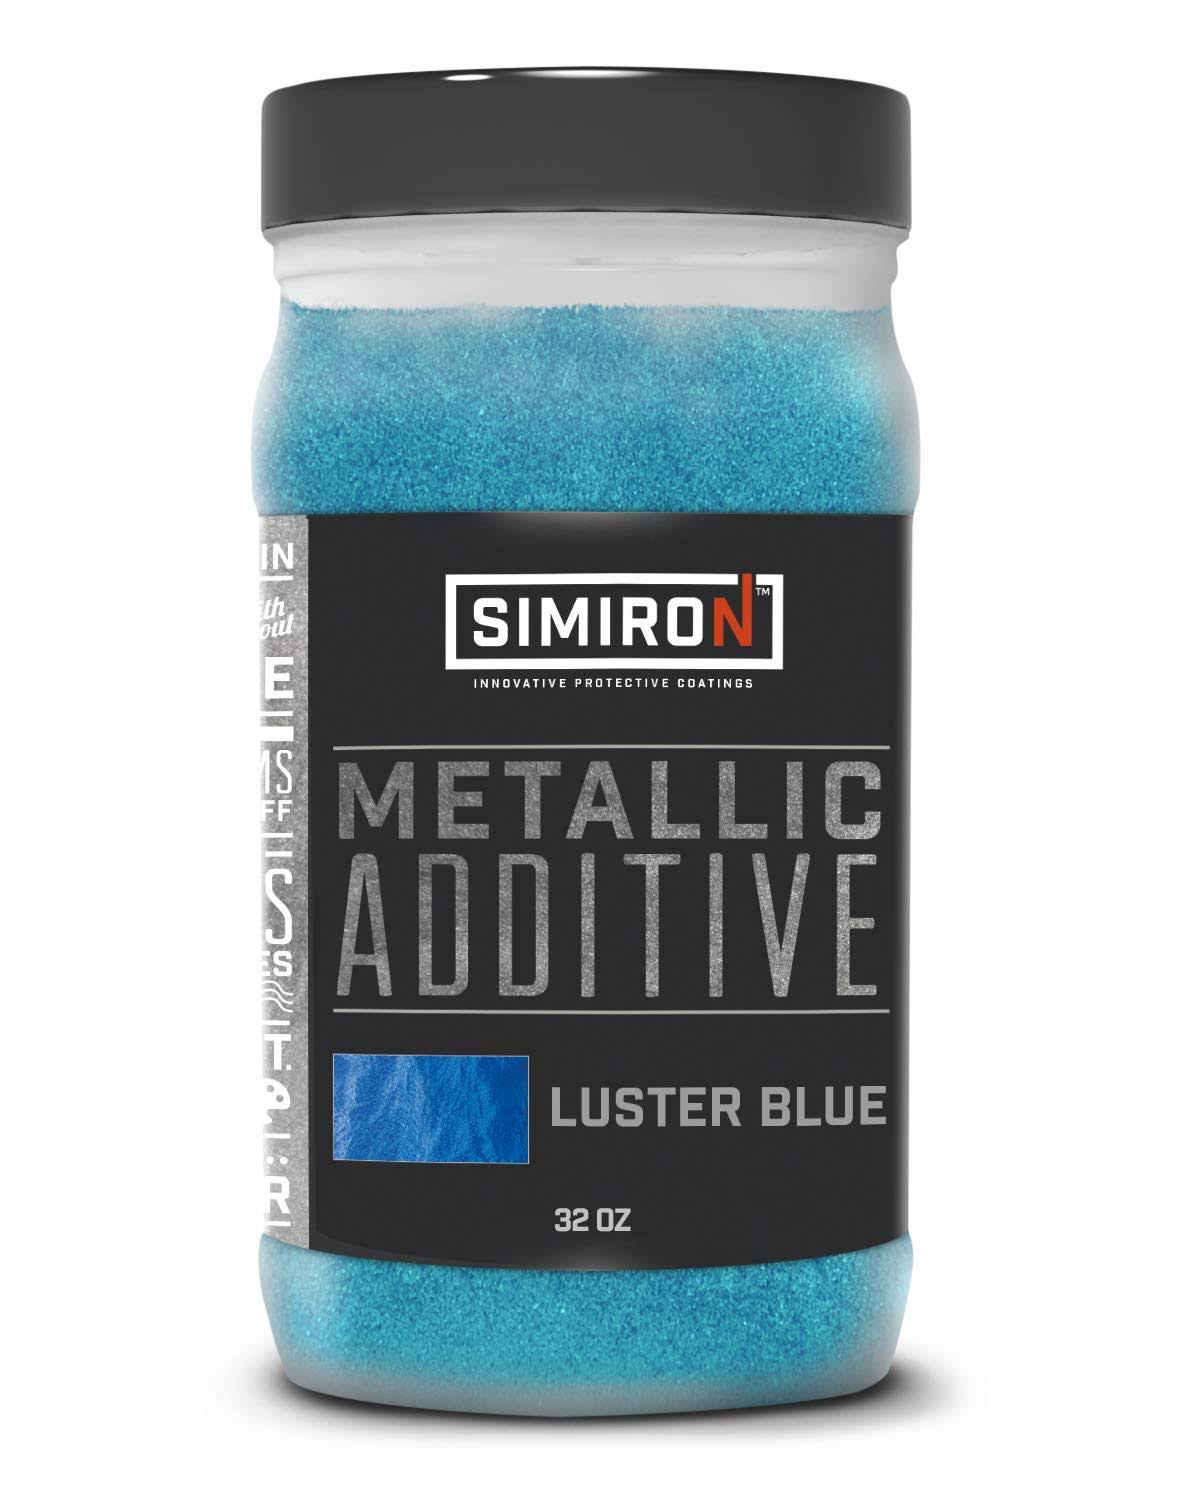 Simiron Metallic Additive, Luster Blue